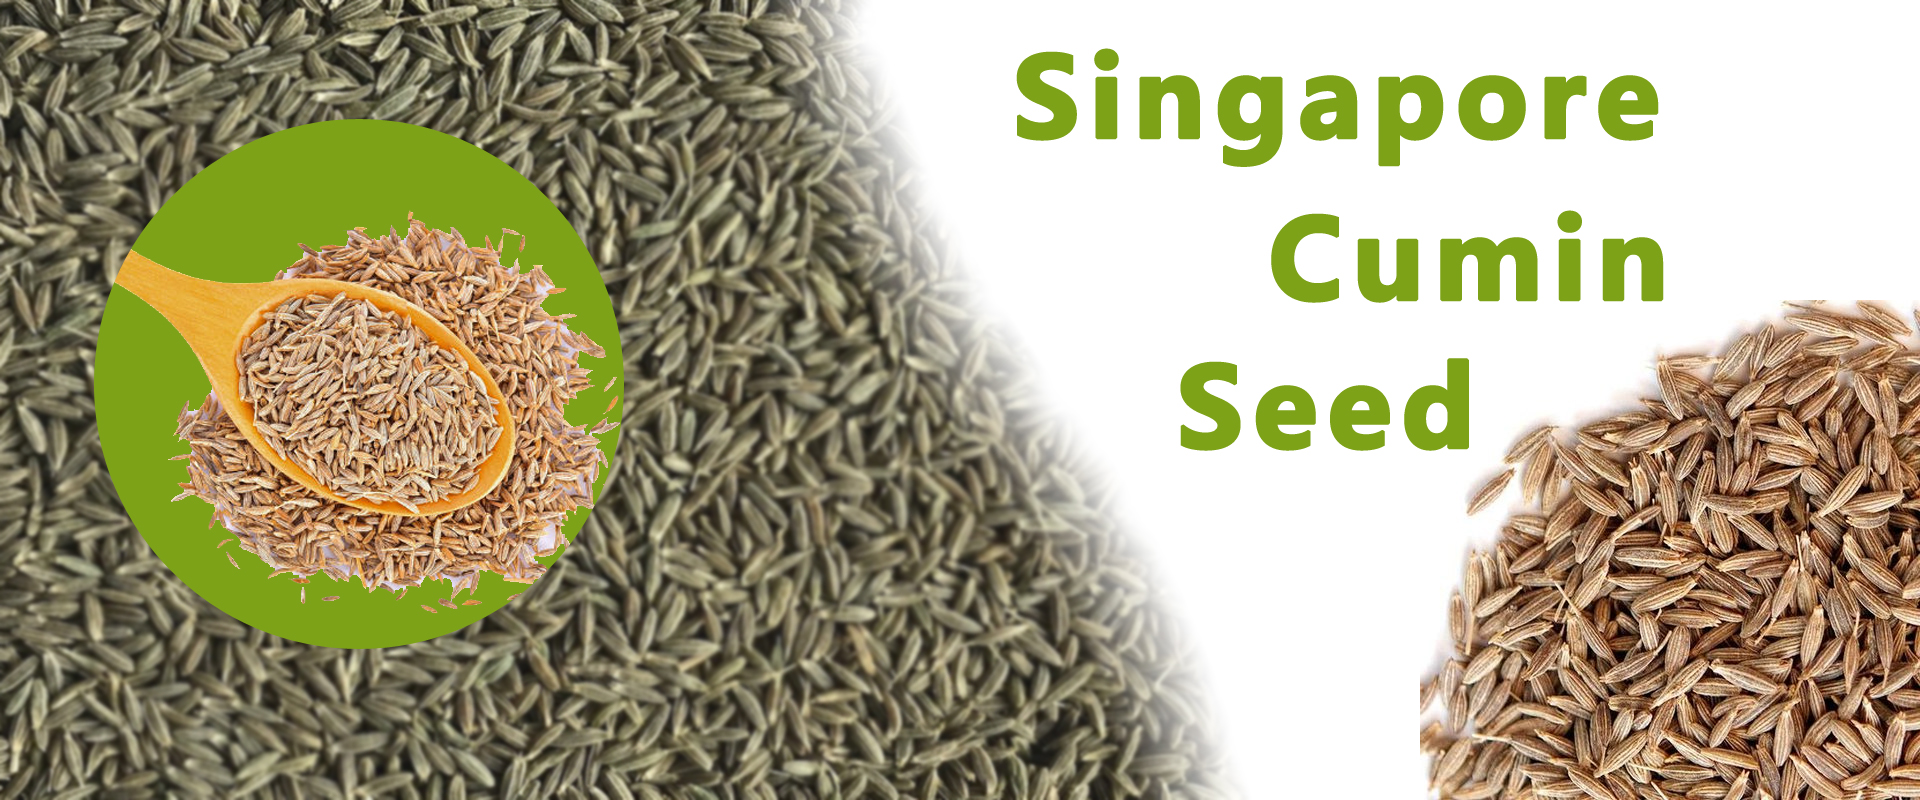 Singapore Cumin Seed